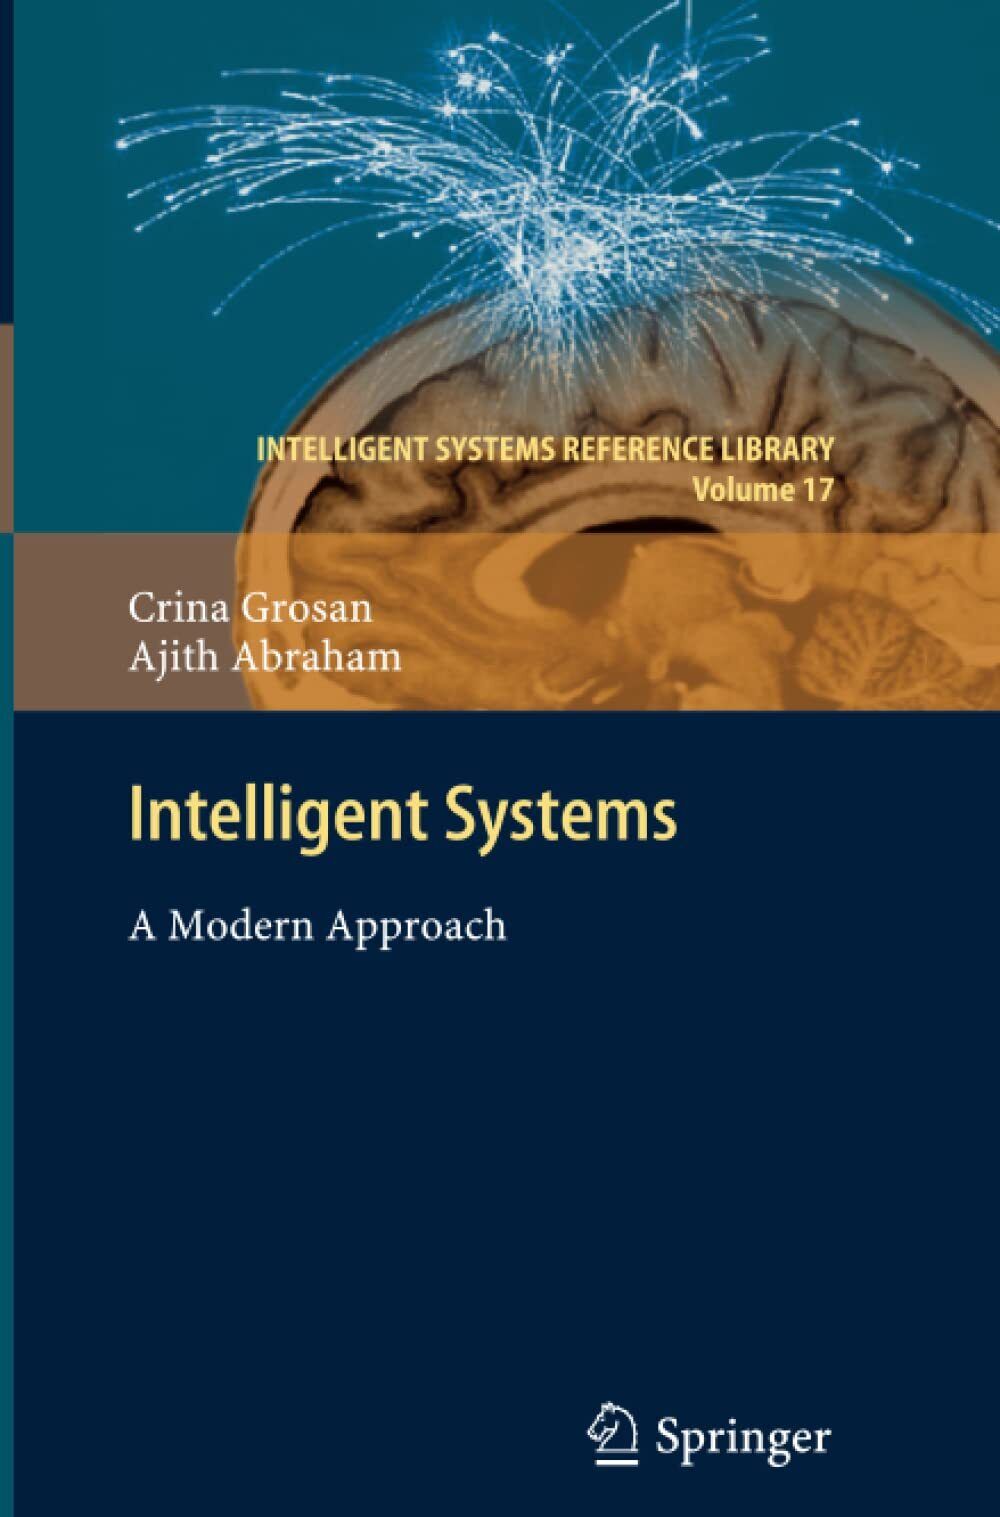 Intelligent Systems - Ajith Abraham, Crina Grosan - Springer, 2013